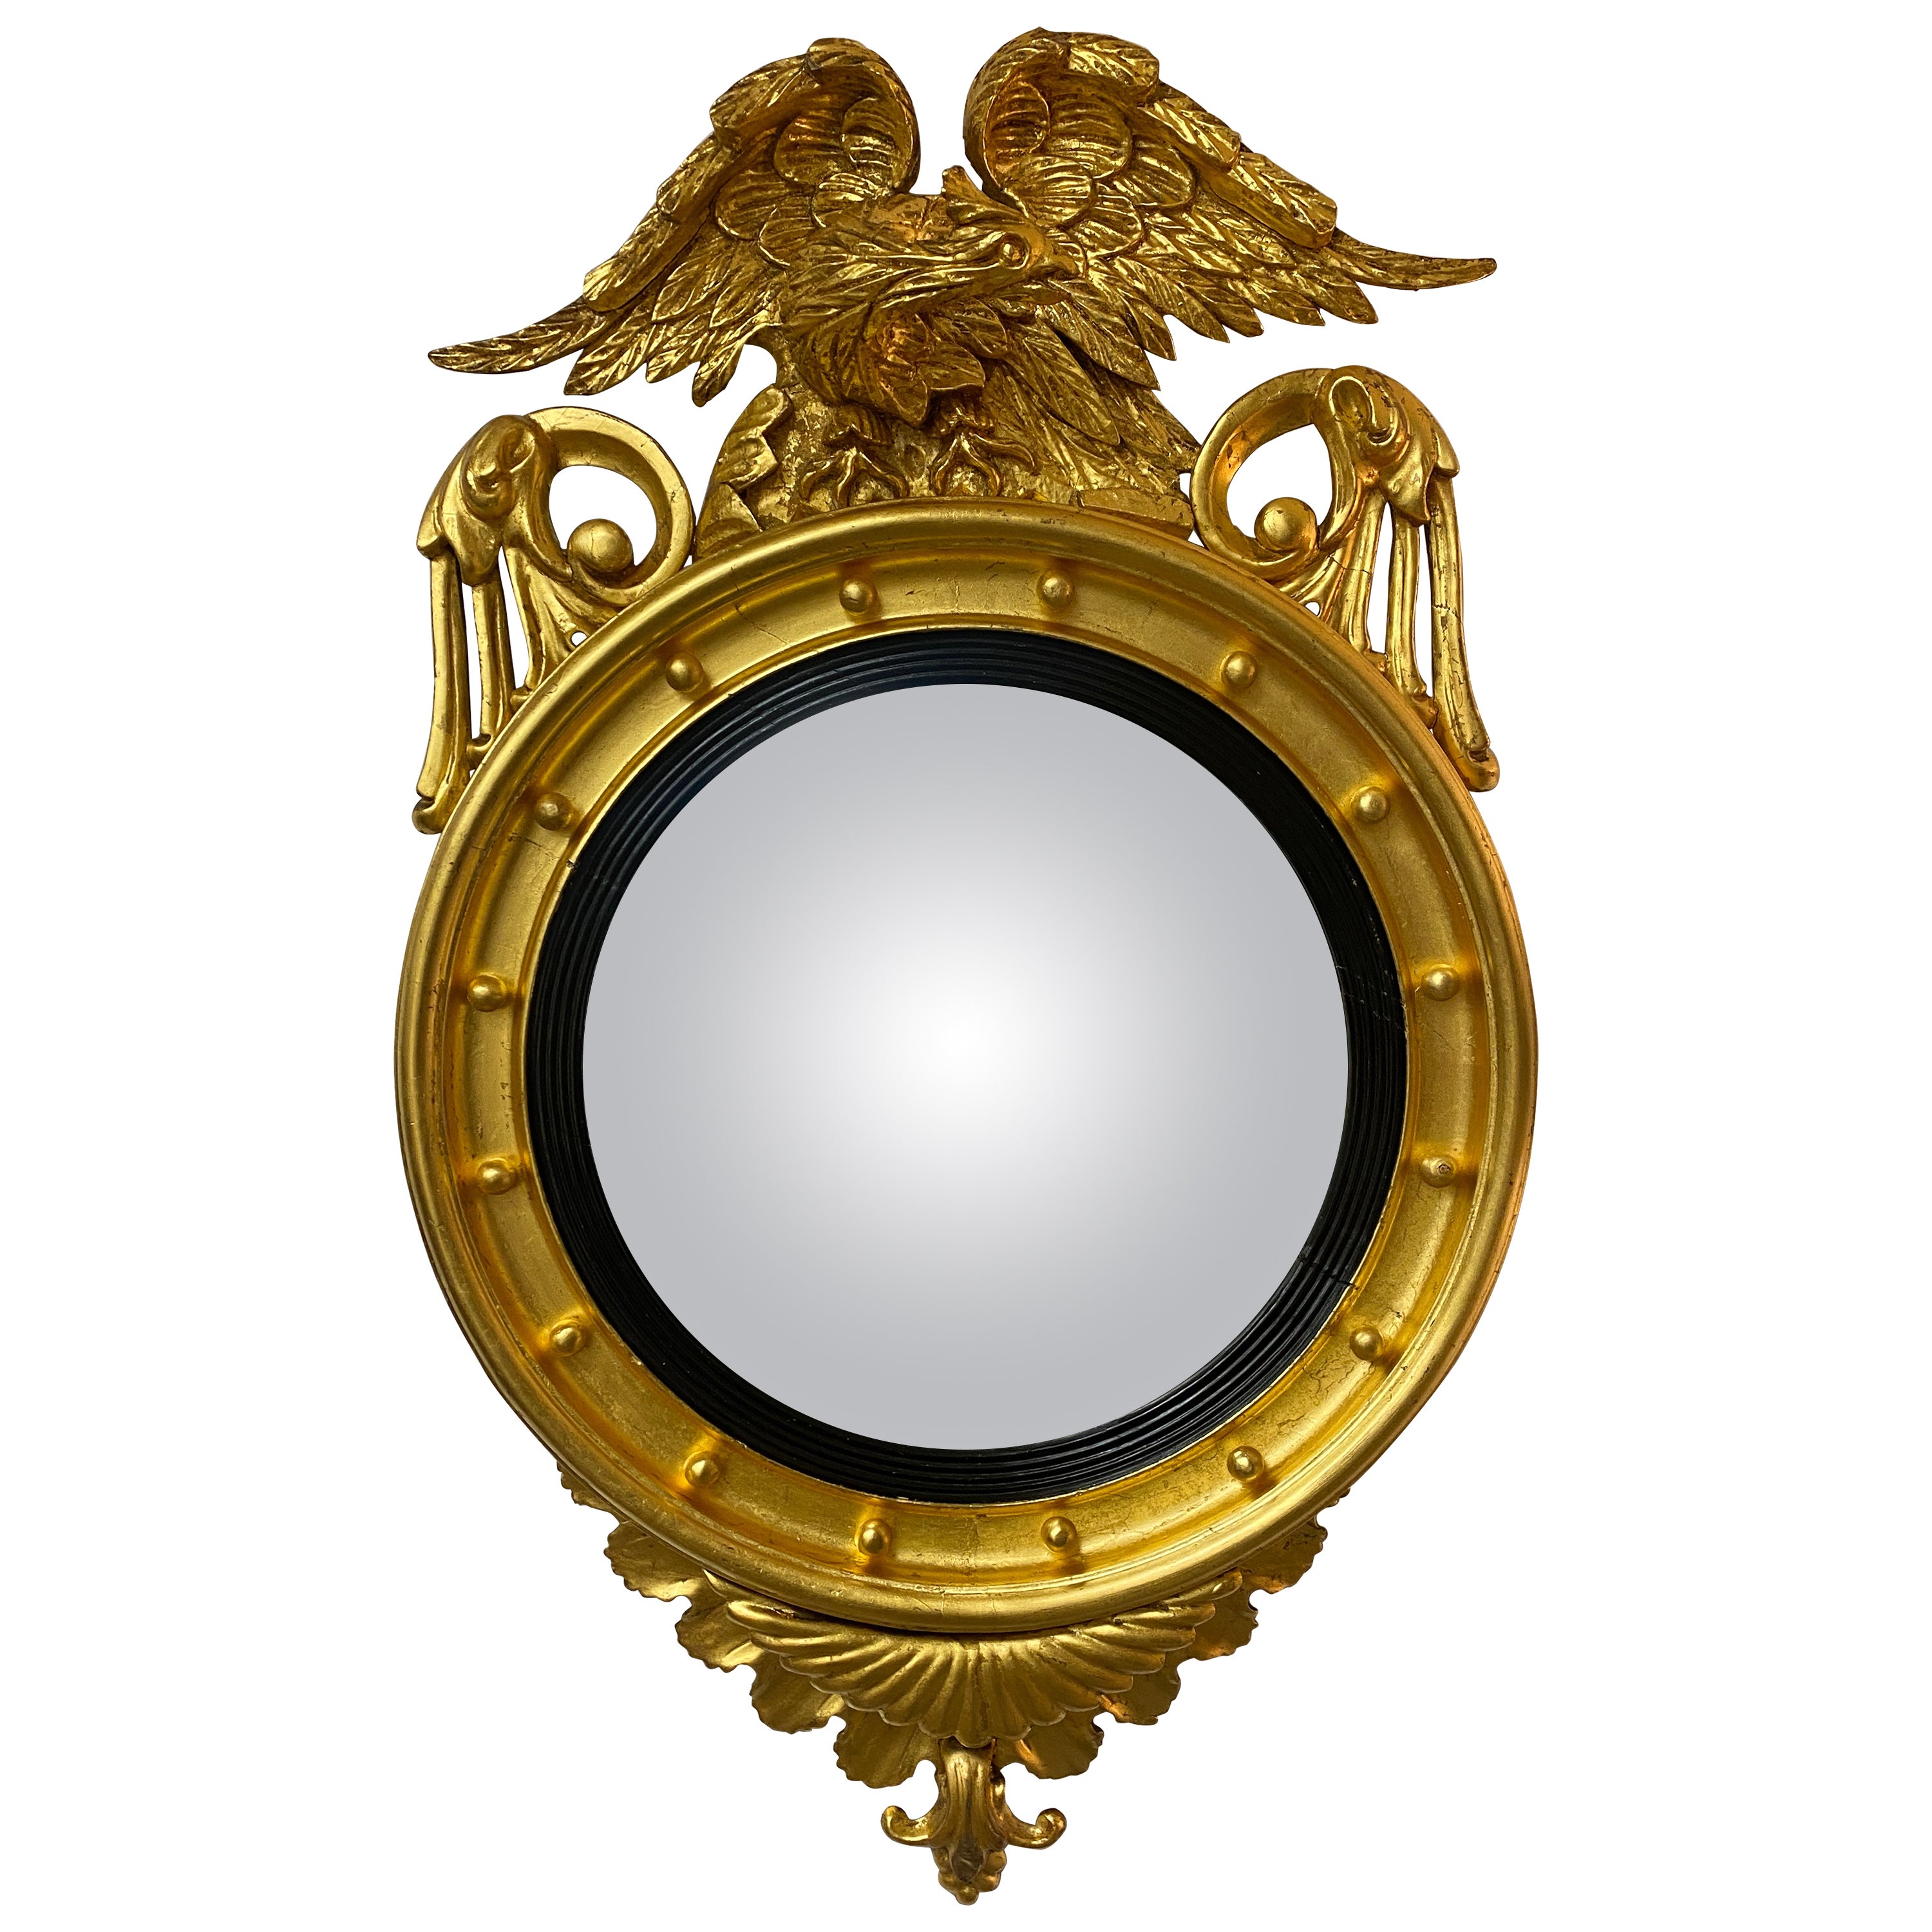 Early 19th Century American Federal Gilt Convex Eagle Mirror